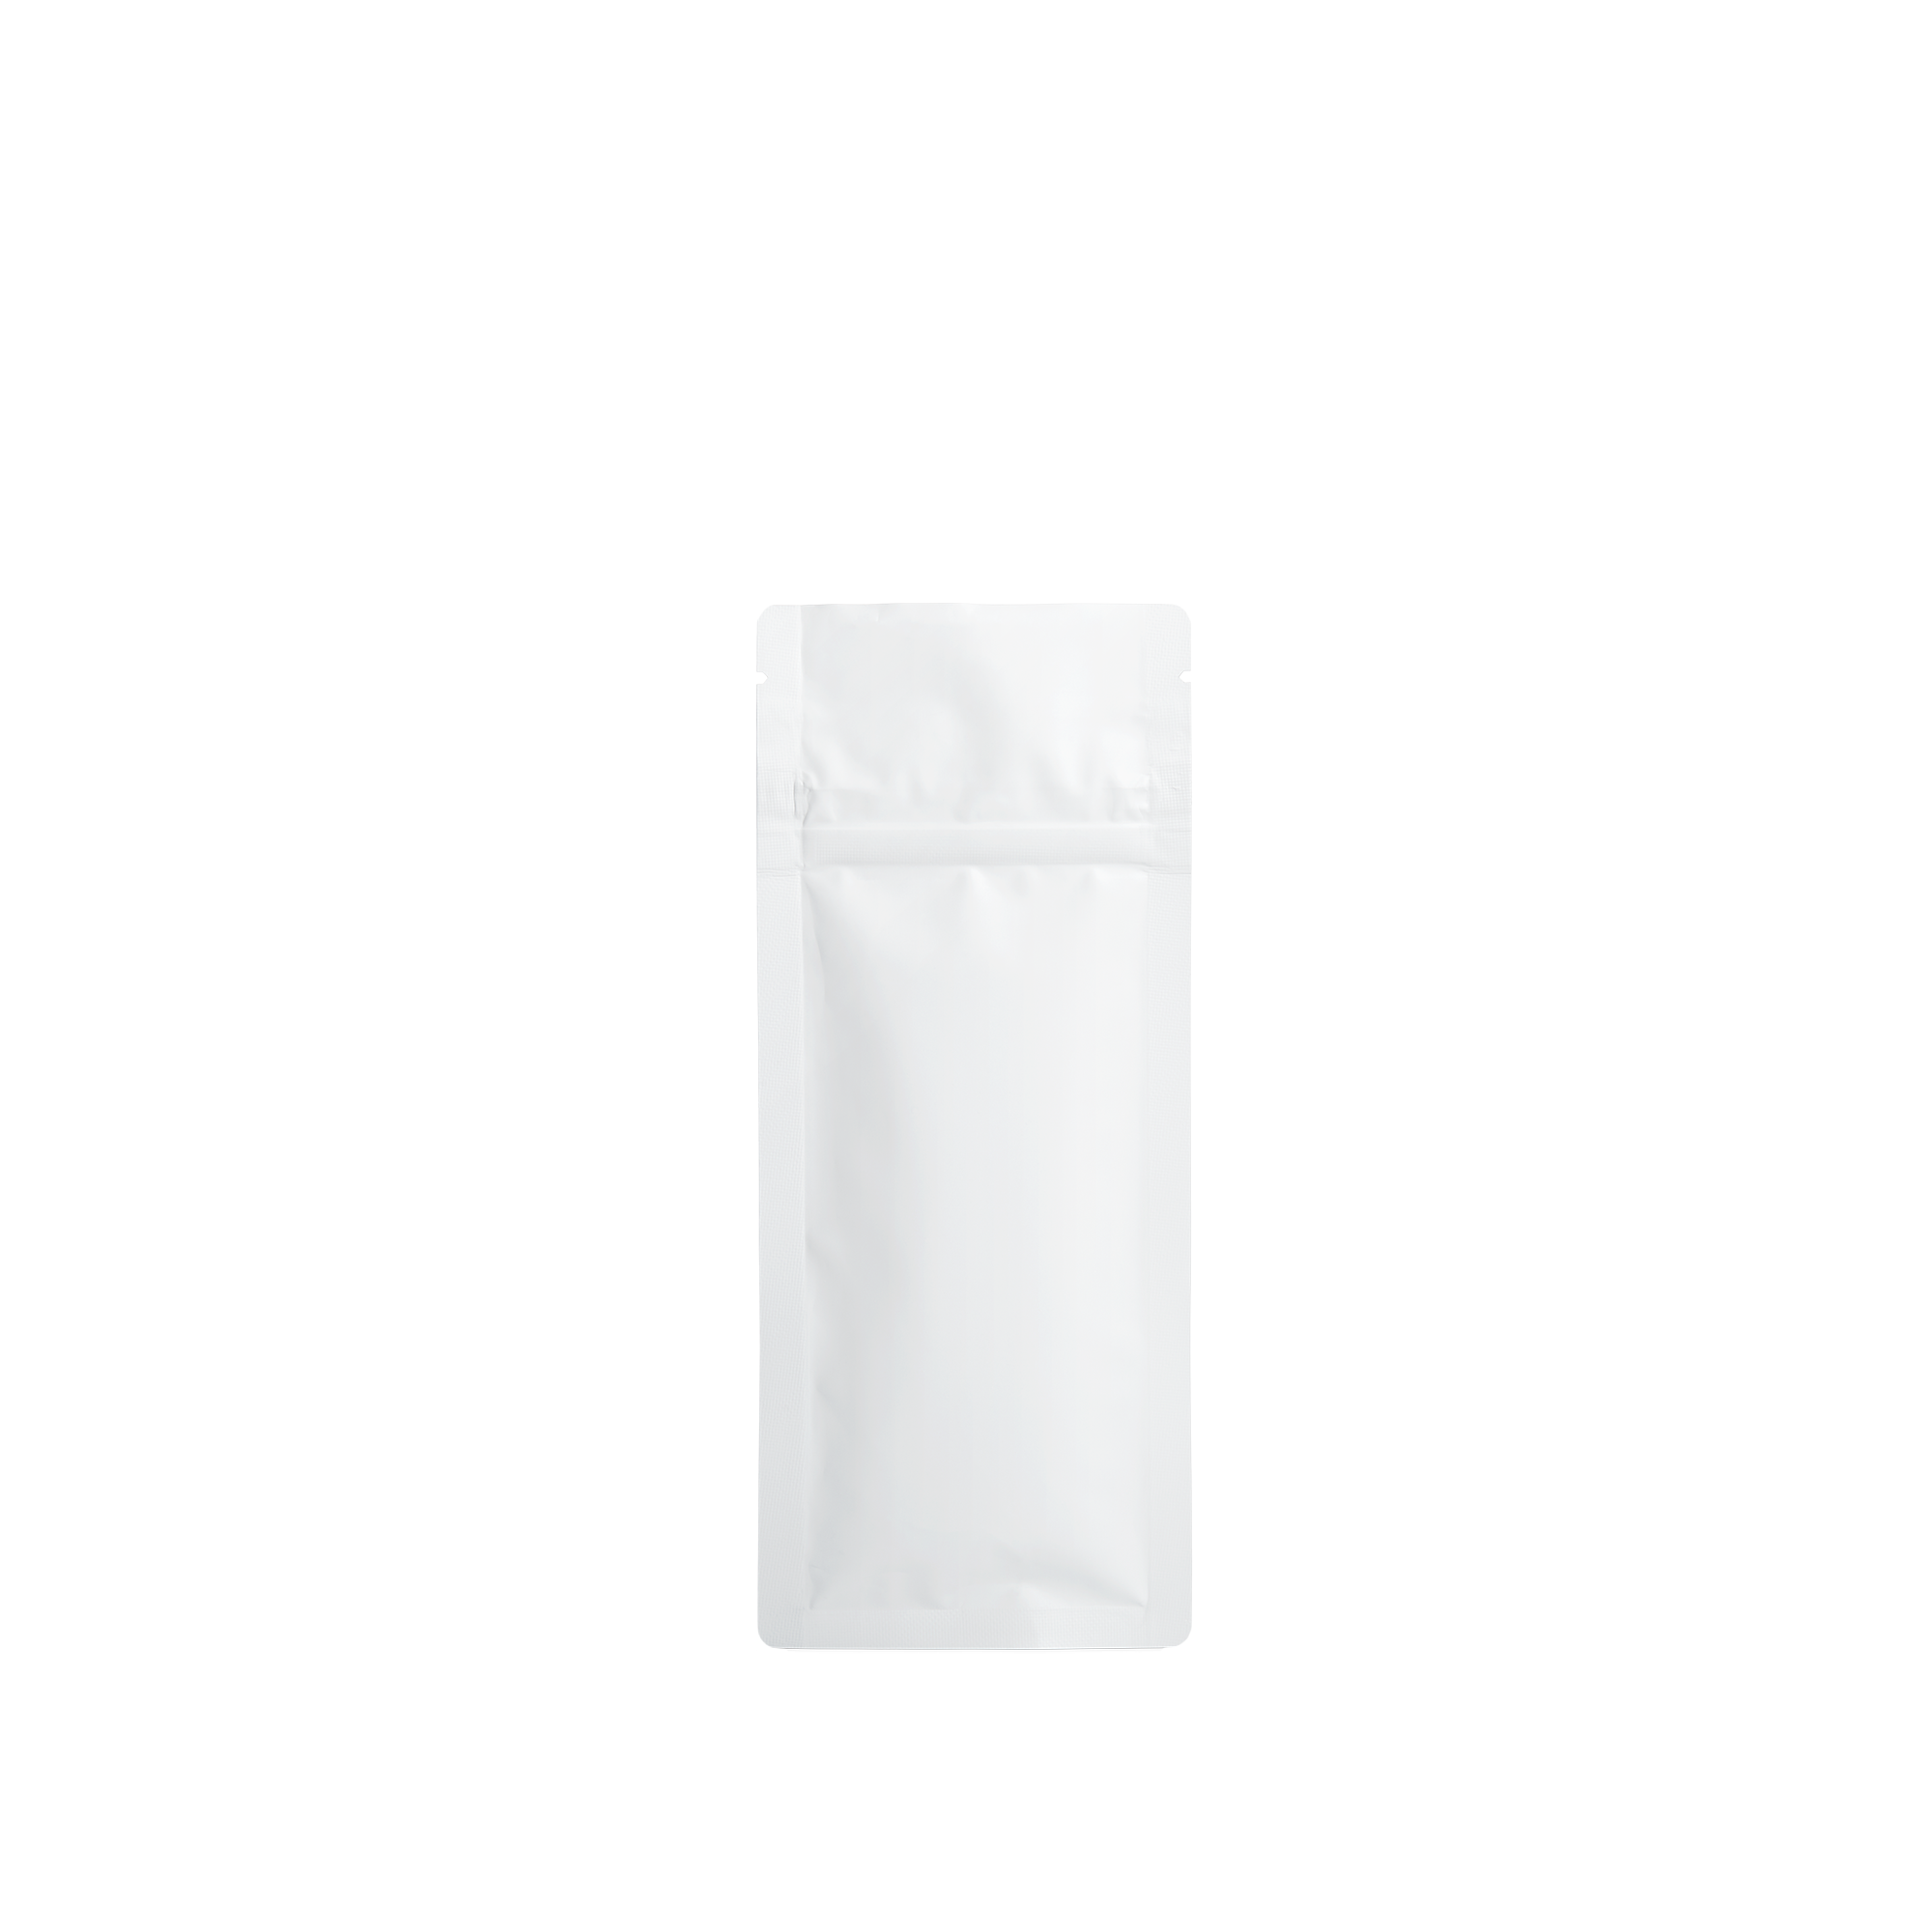 Mylar Bag DymaPak Child Resistant CR White 1/4 oz - Opaque 7 Grams (1,000 Count), 500 Count